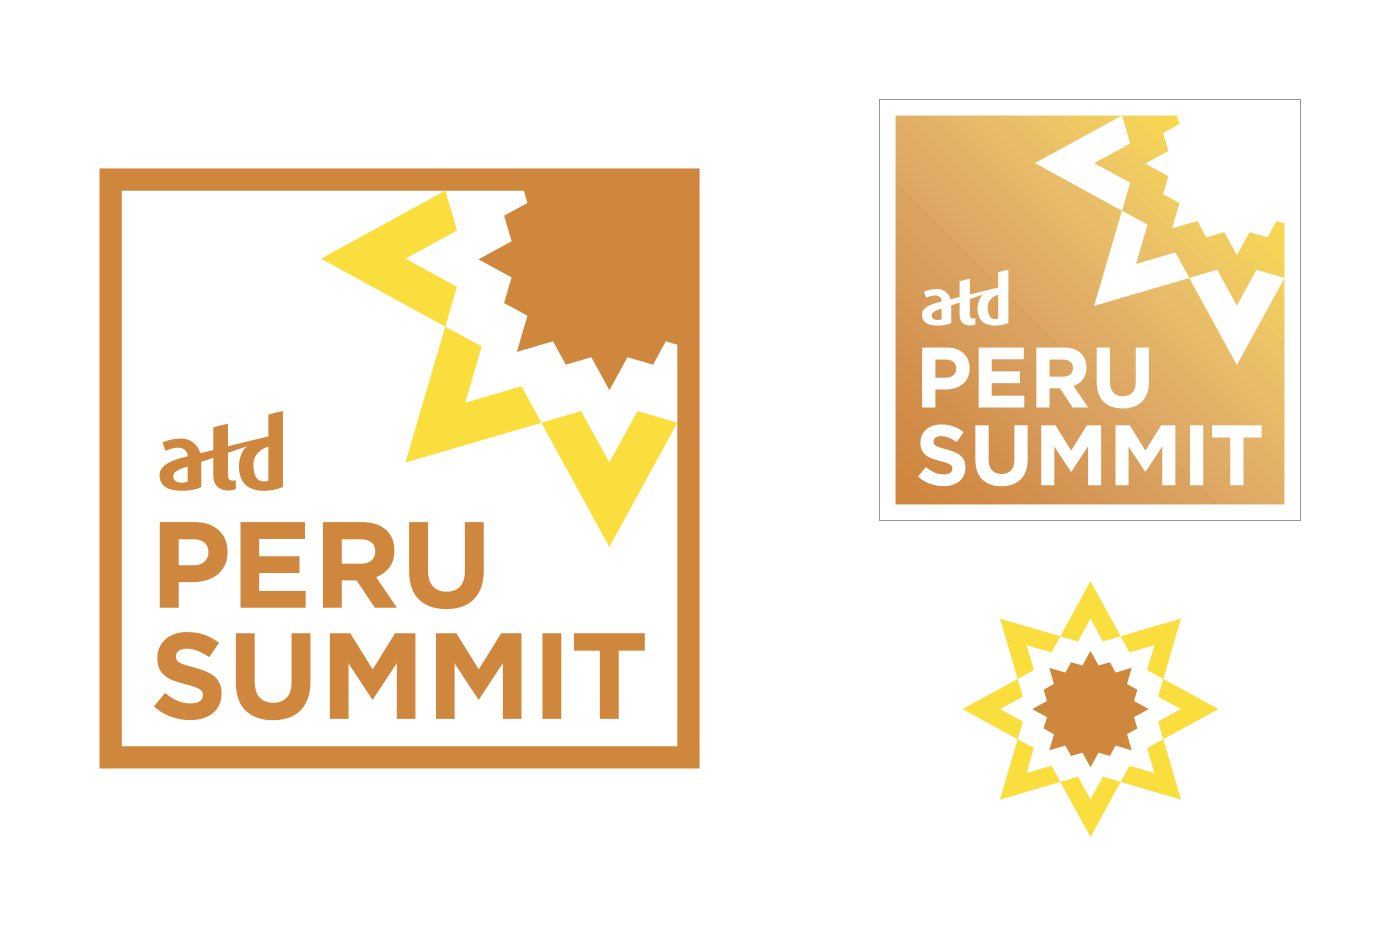 ATD Logo - ATD Global Summit Logos, 2019 by Brandon Rush at Coroflot.com